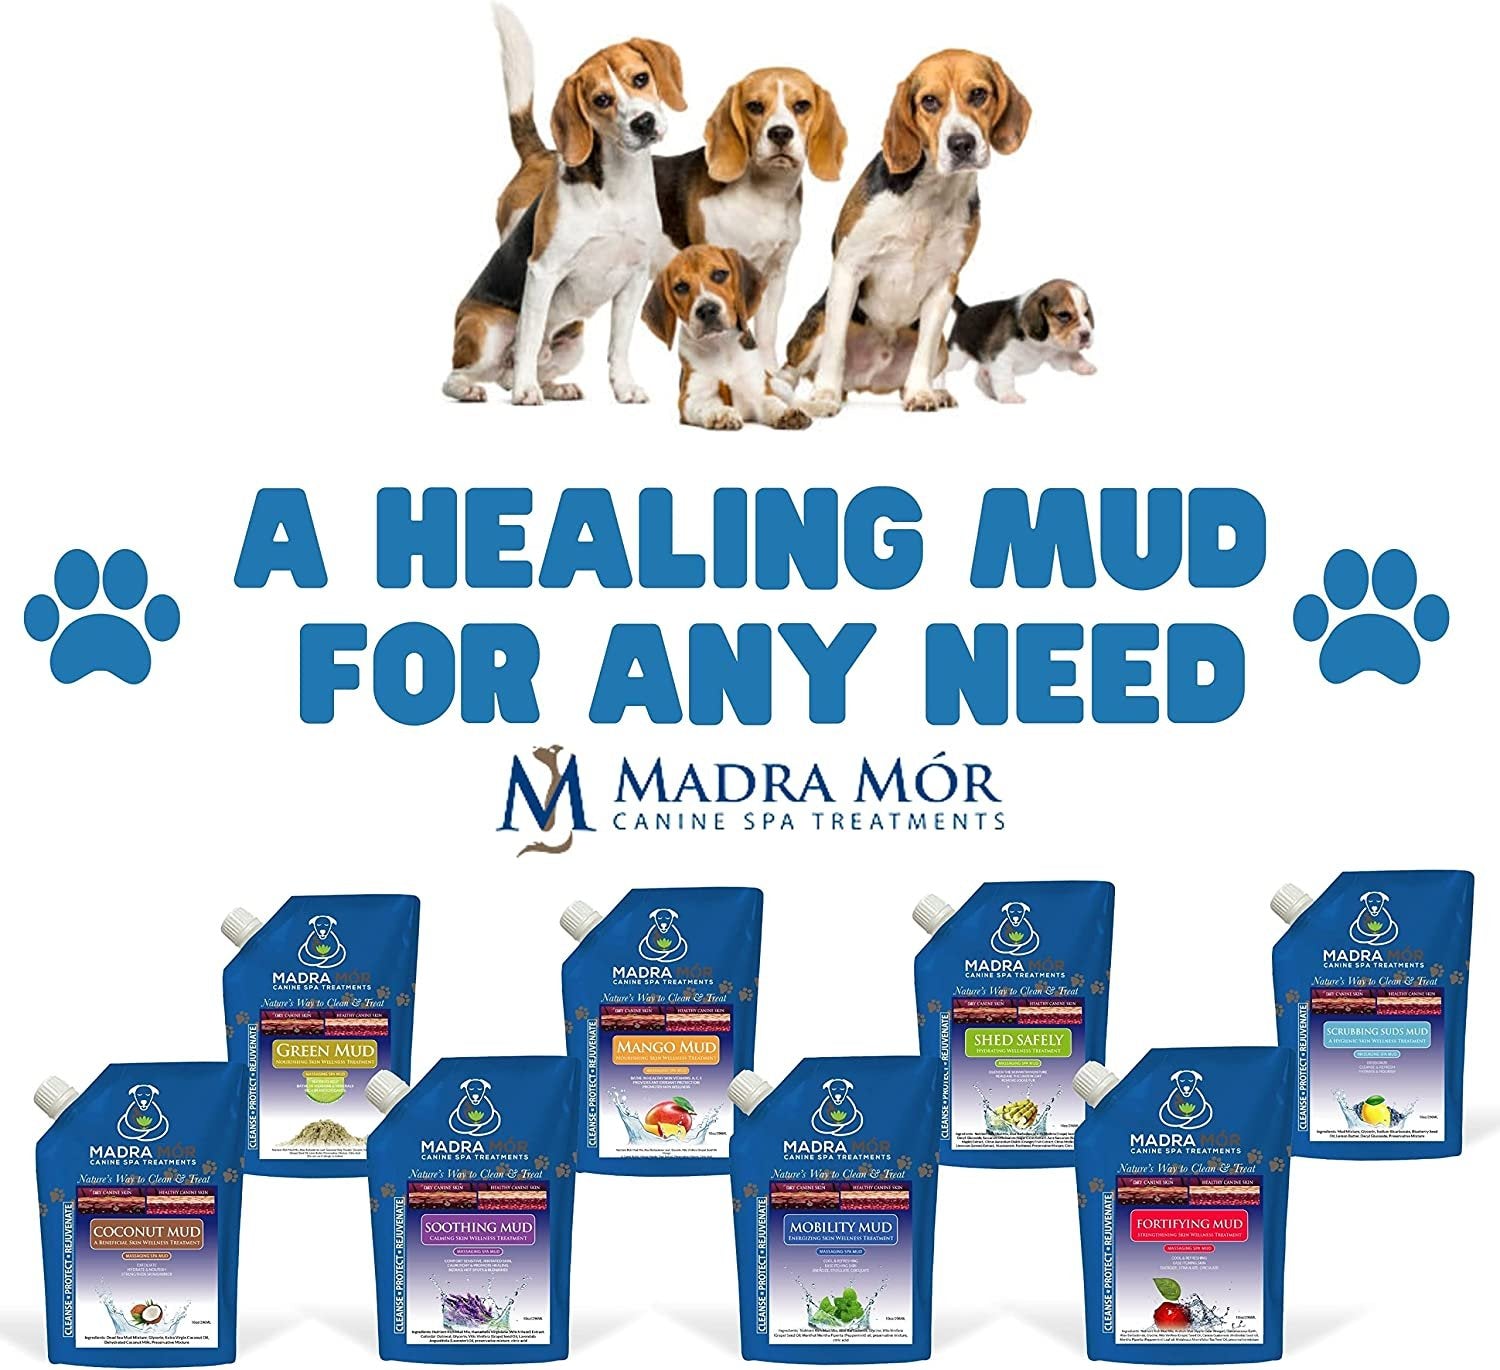 Madra Mor Massaging SPA Mud - Luxurious Dog Skin Wellness Treatment - Cleanse - Protect - Rejuvenate - Scrubbing Suds Mud- 1 Pack (10oz) - with Multi-Purpose Key Chain